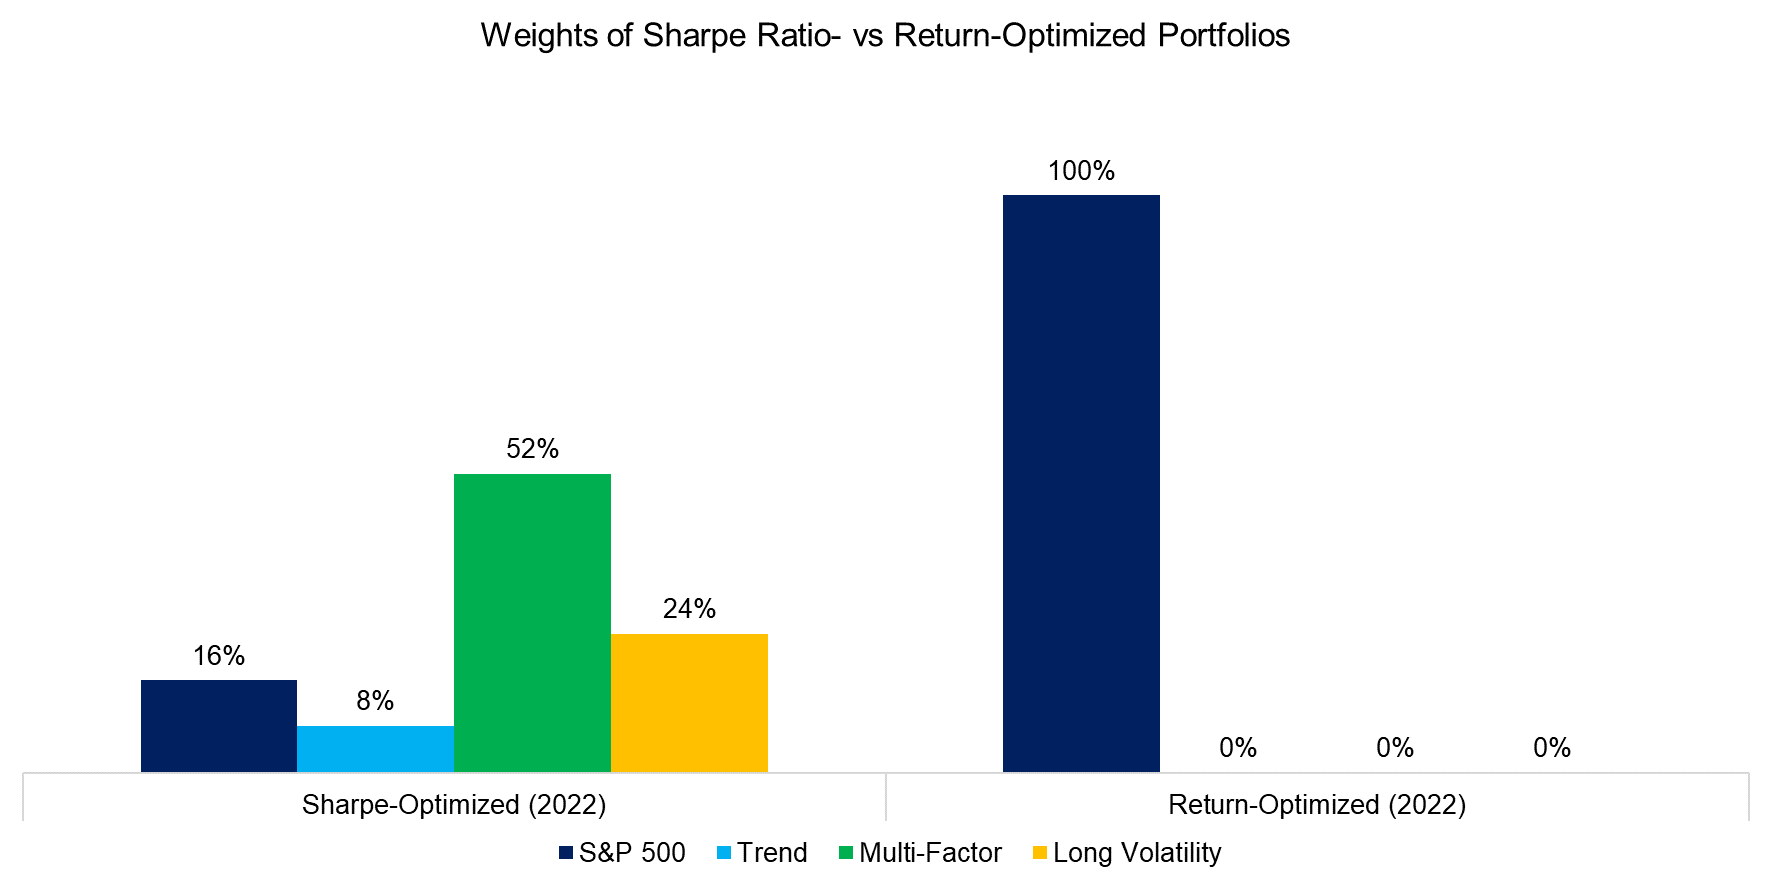 Weights of Sharpe Ratio- vs Return-Optimized Portfolios